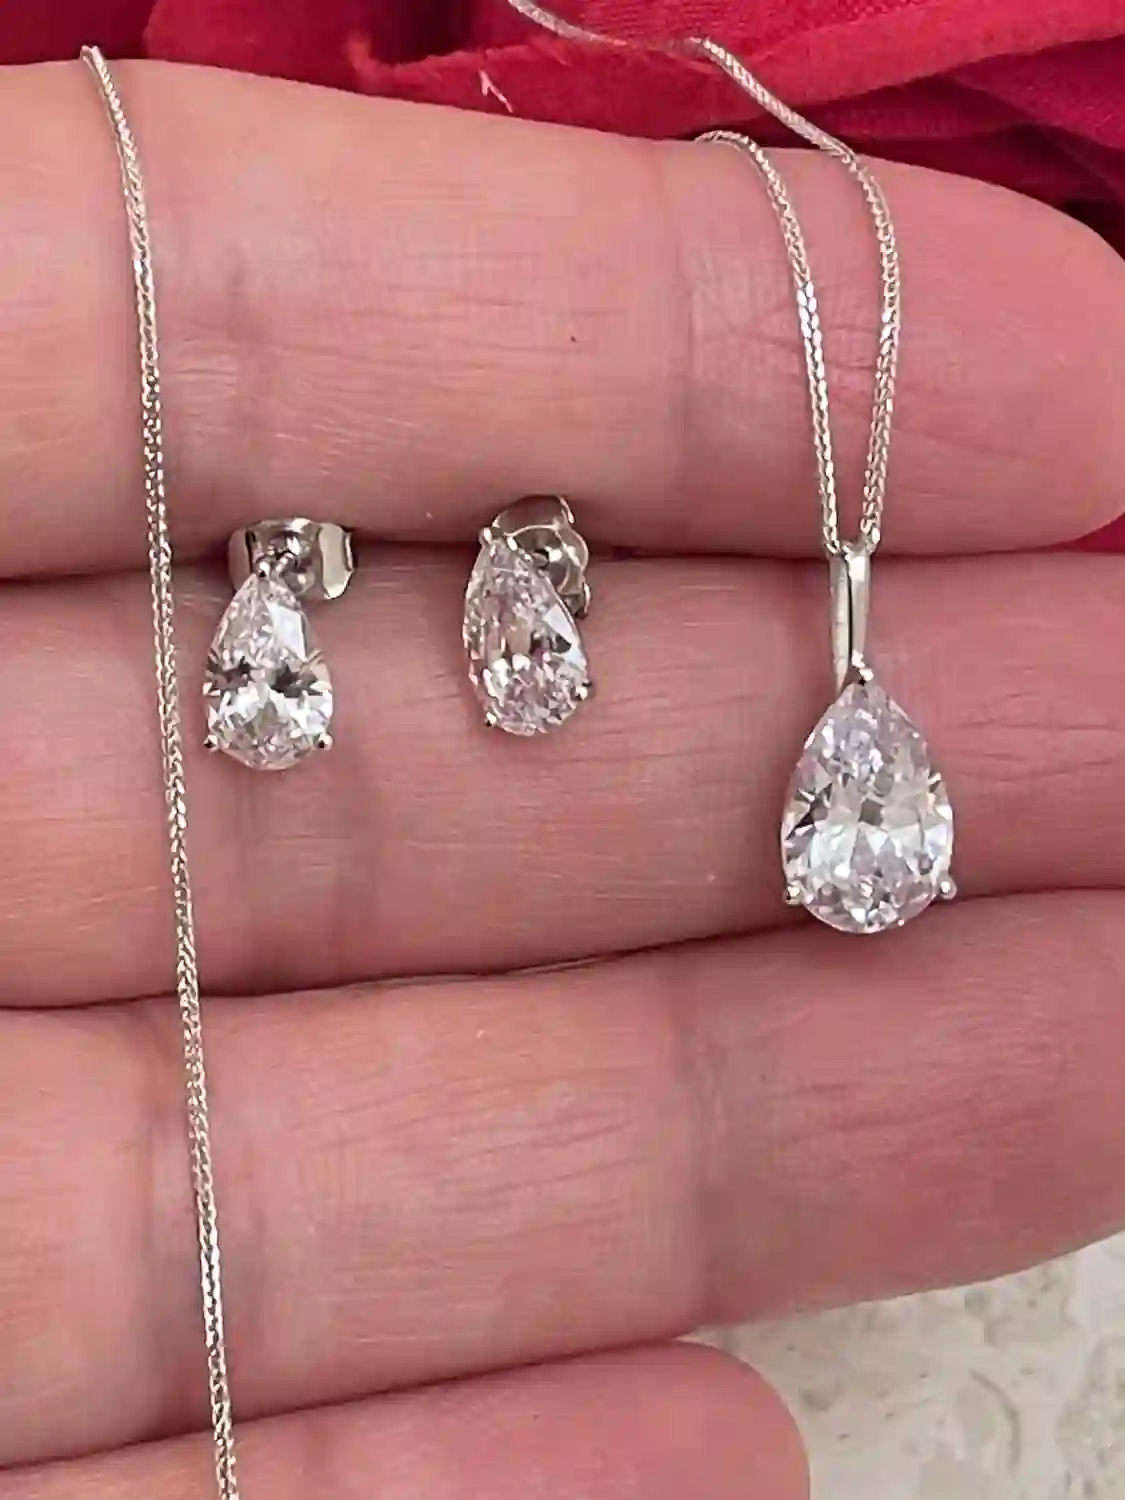 3ctw Diamond Tear Drop Pendant Diamond Teardrop Earrings Solid 18k GOLD Diamond Jewelry SET Pear Diamond Anniversary Birthday Gift for her 